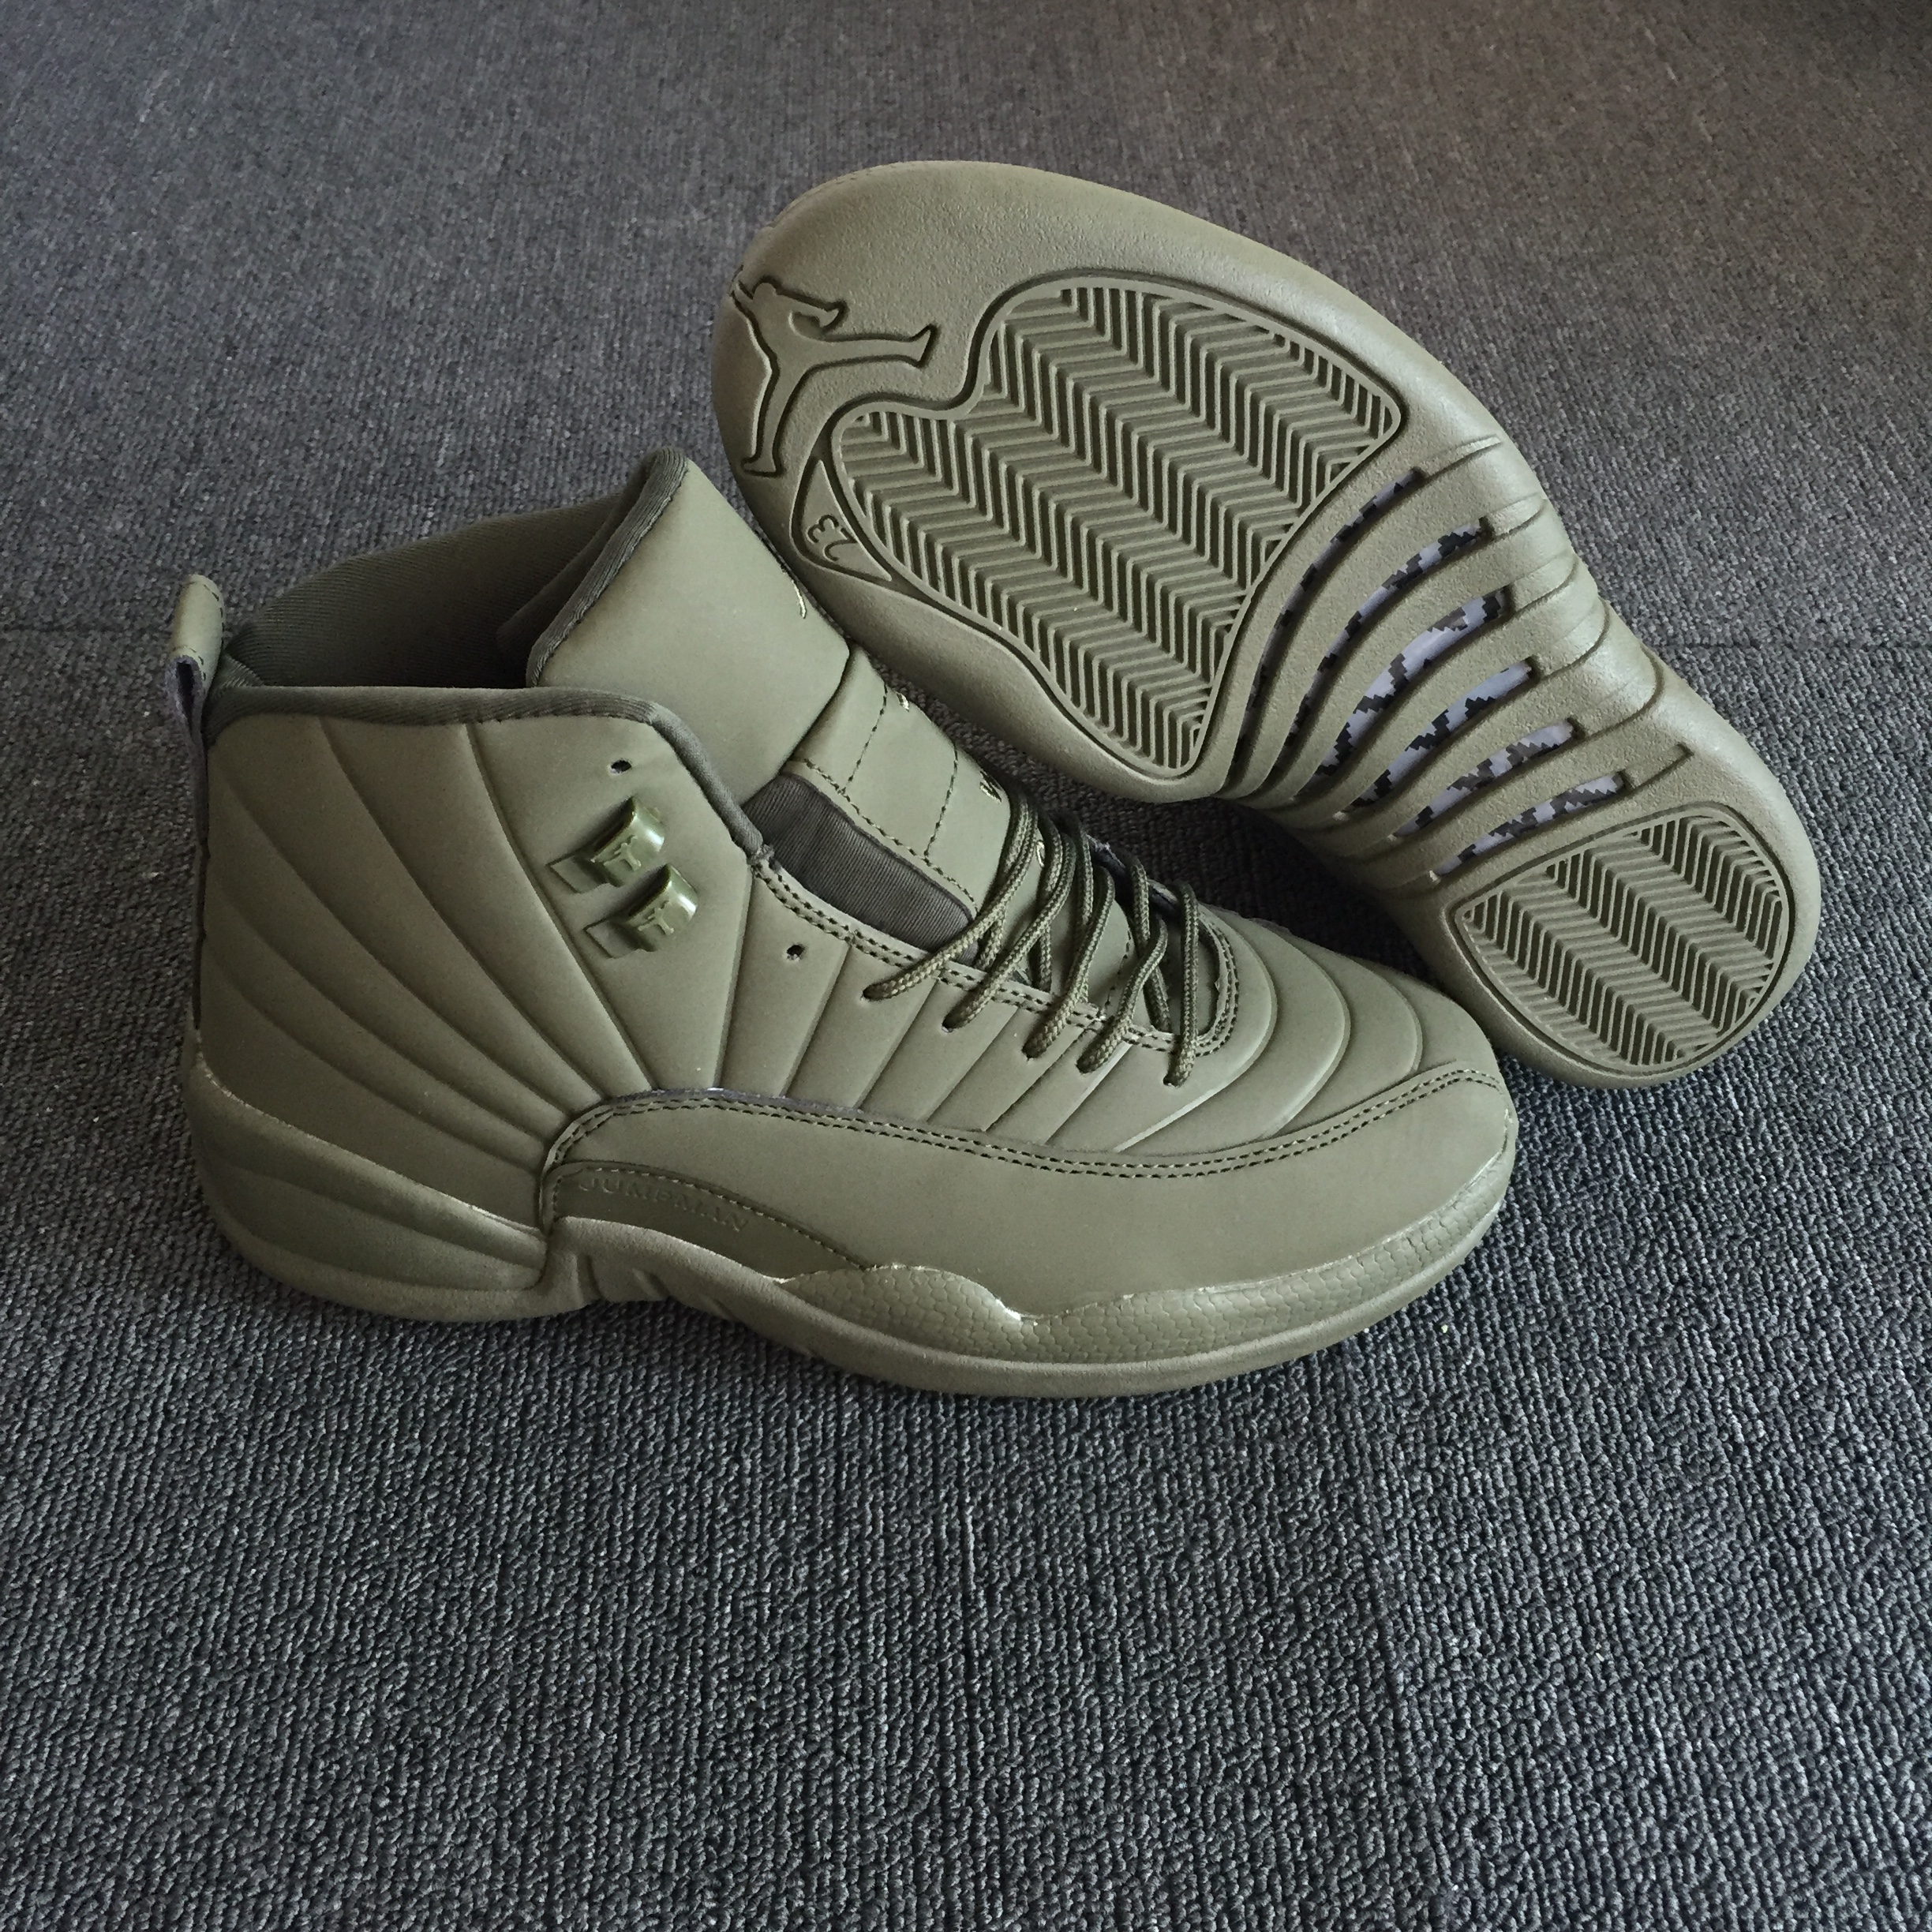 New Air Jordan 12 High Army Green Shoes